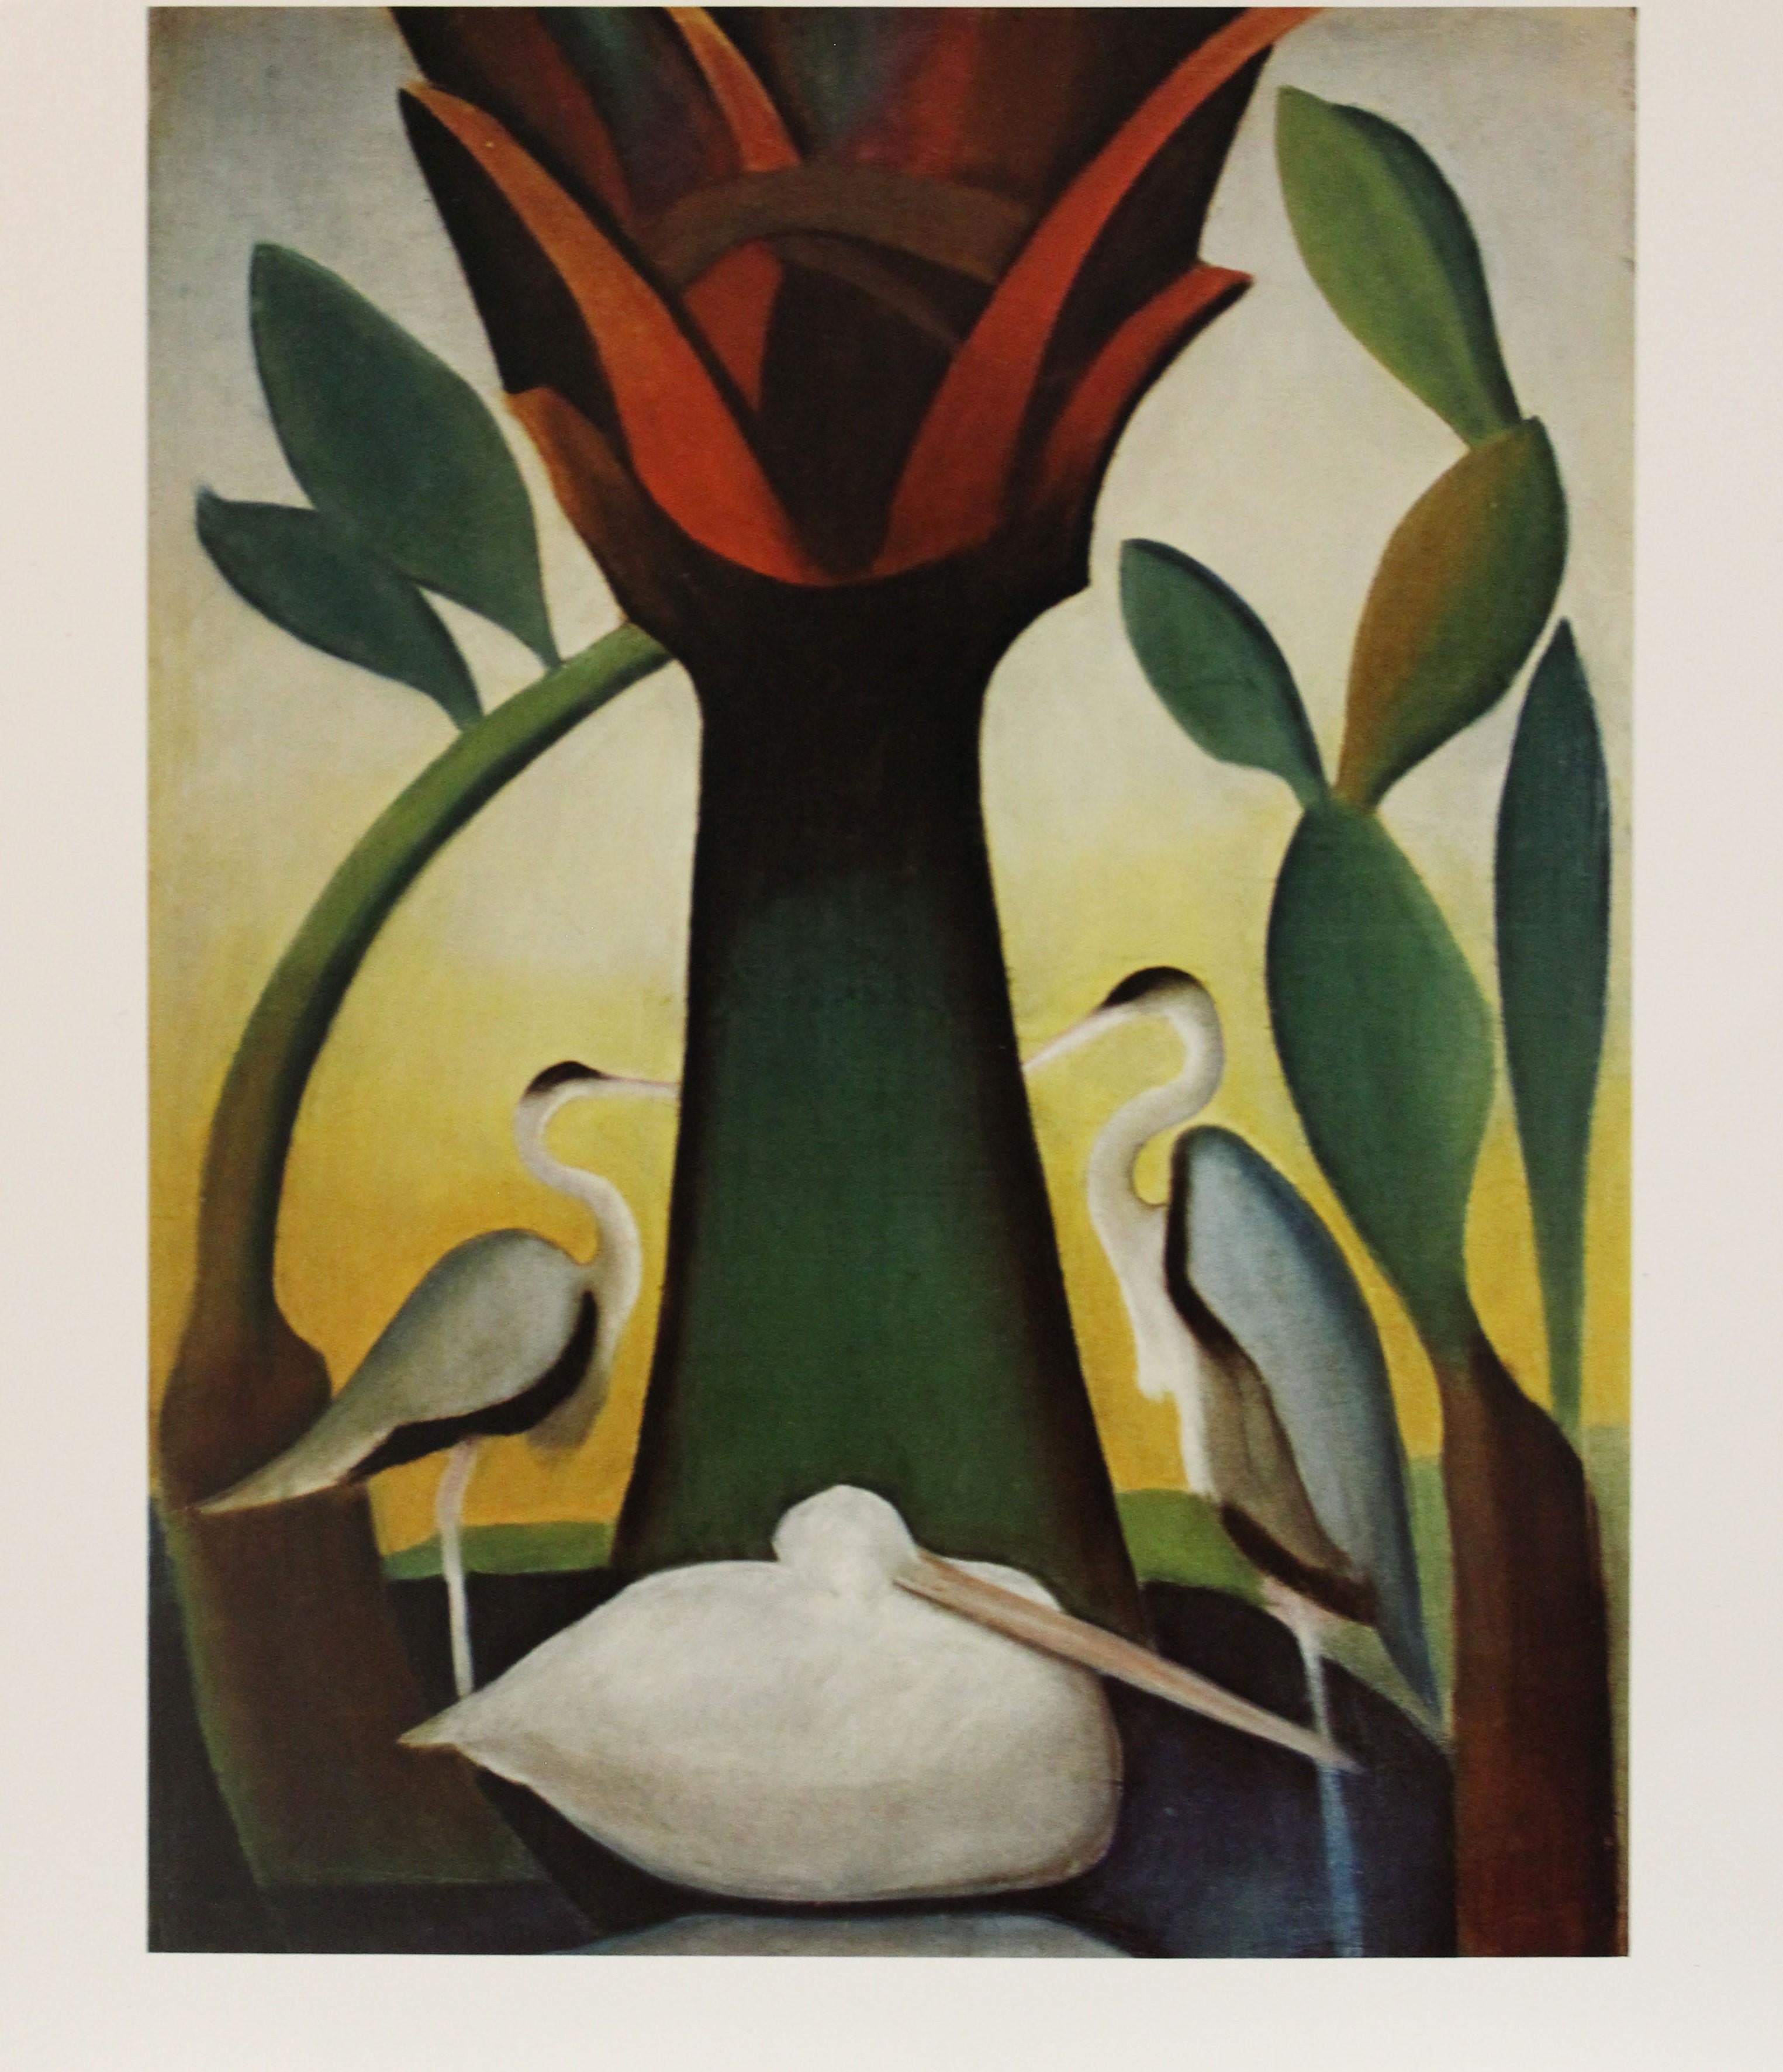 Joseph Stella Animal Print - "The Palm" Poster 